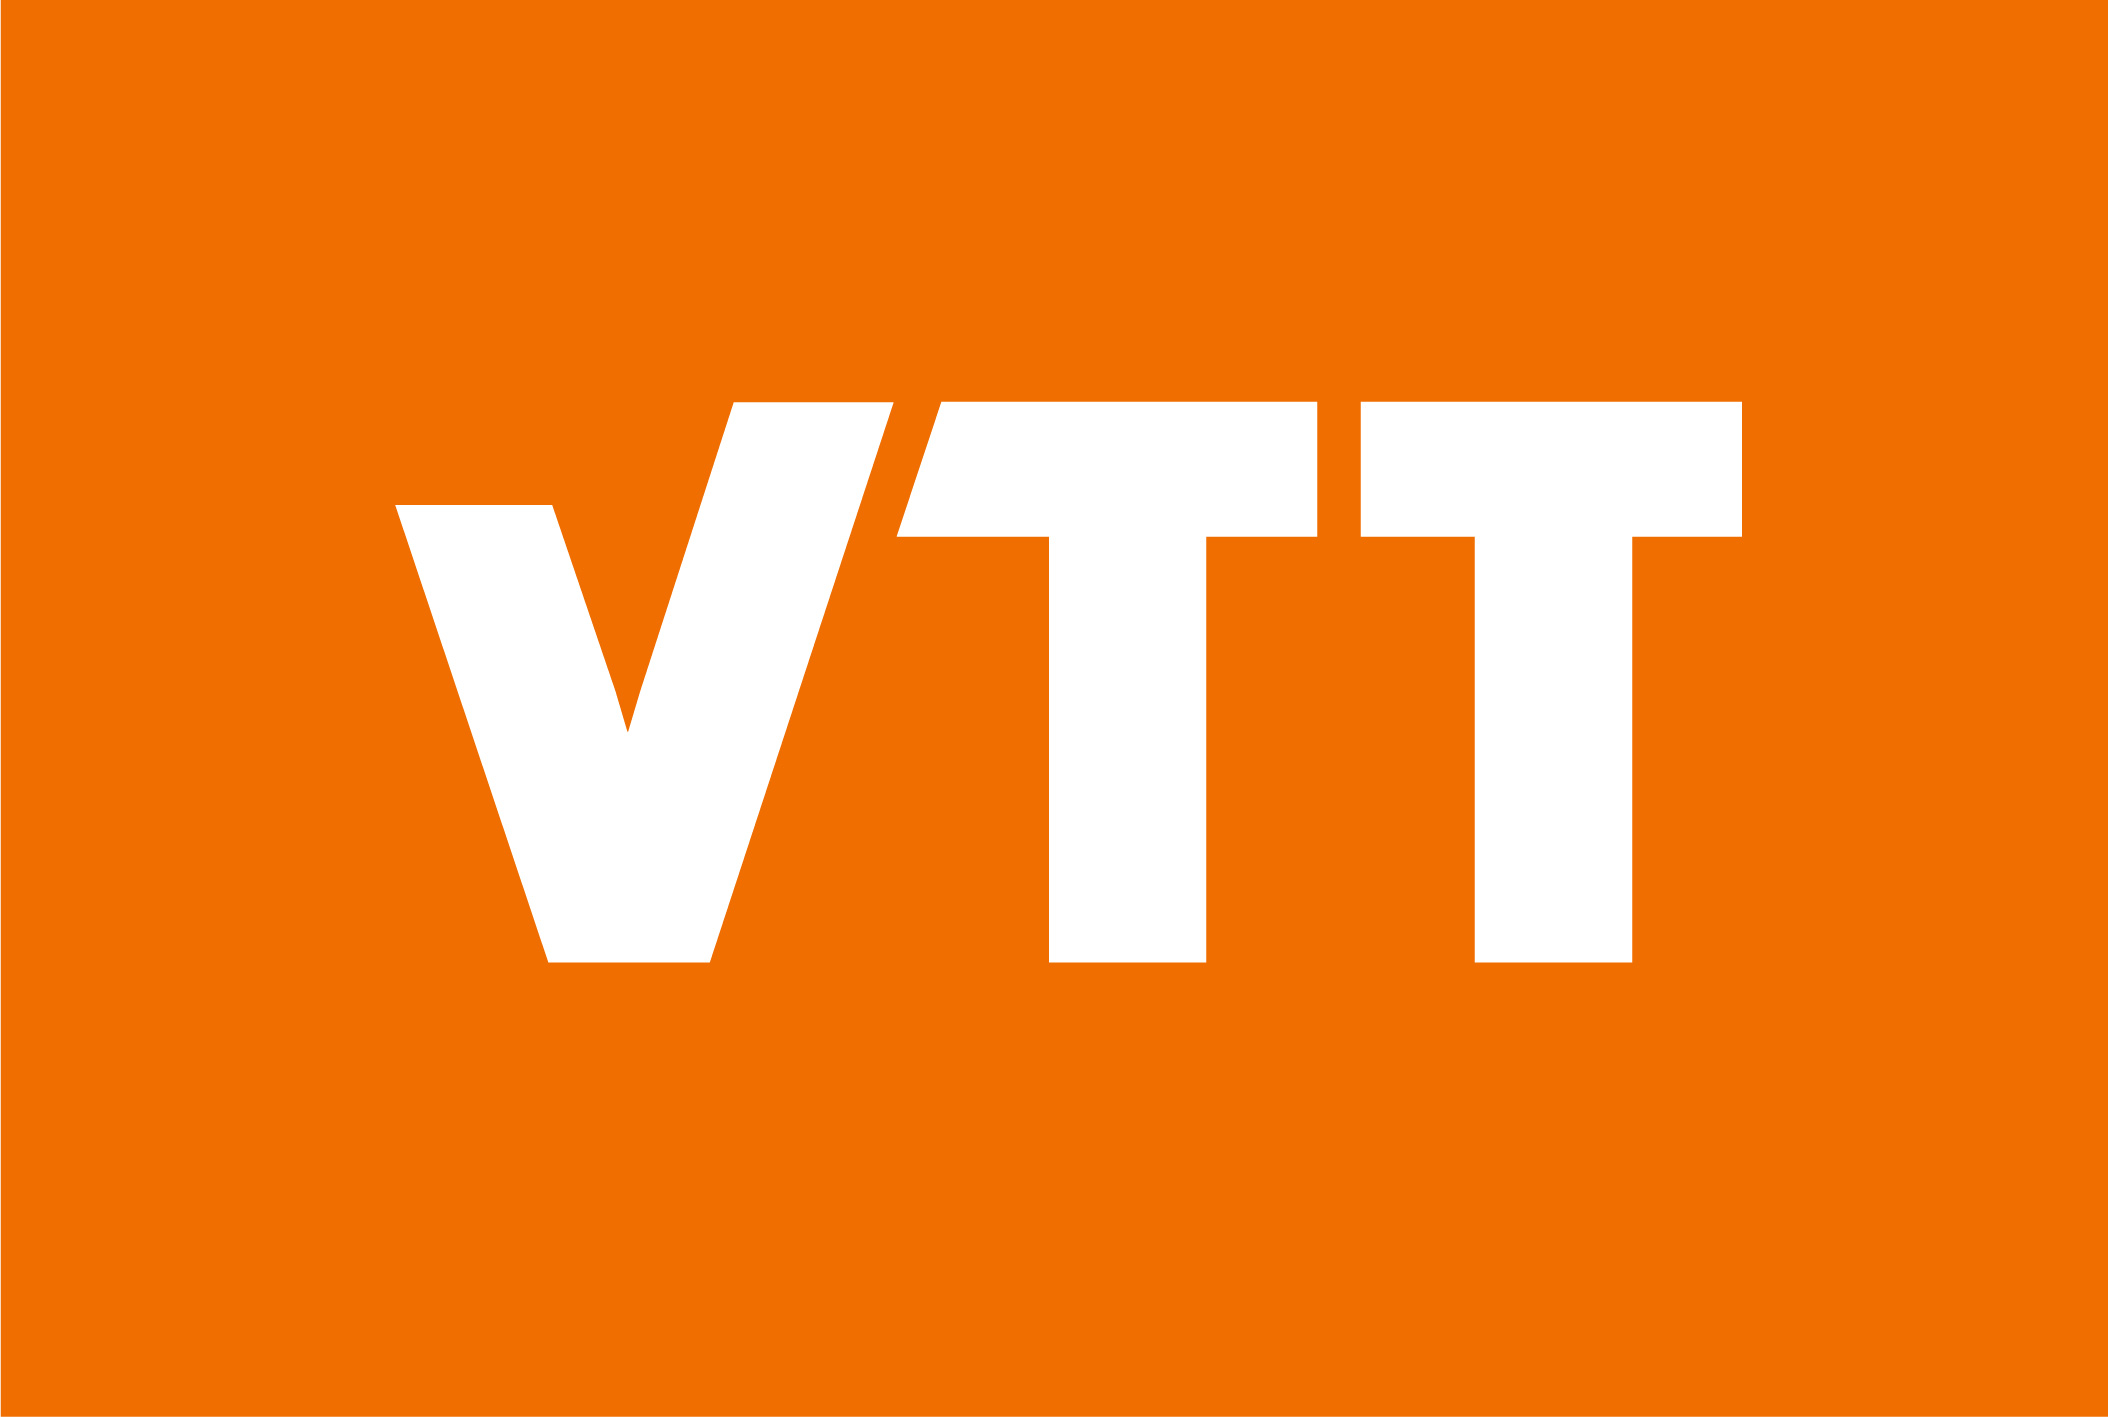 VTT:n logo.